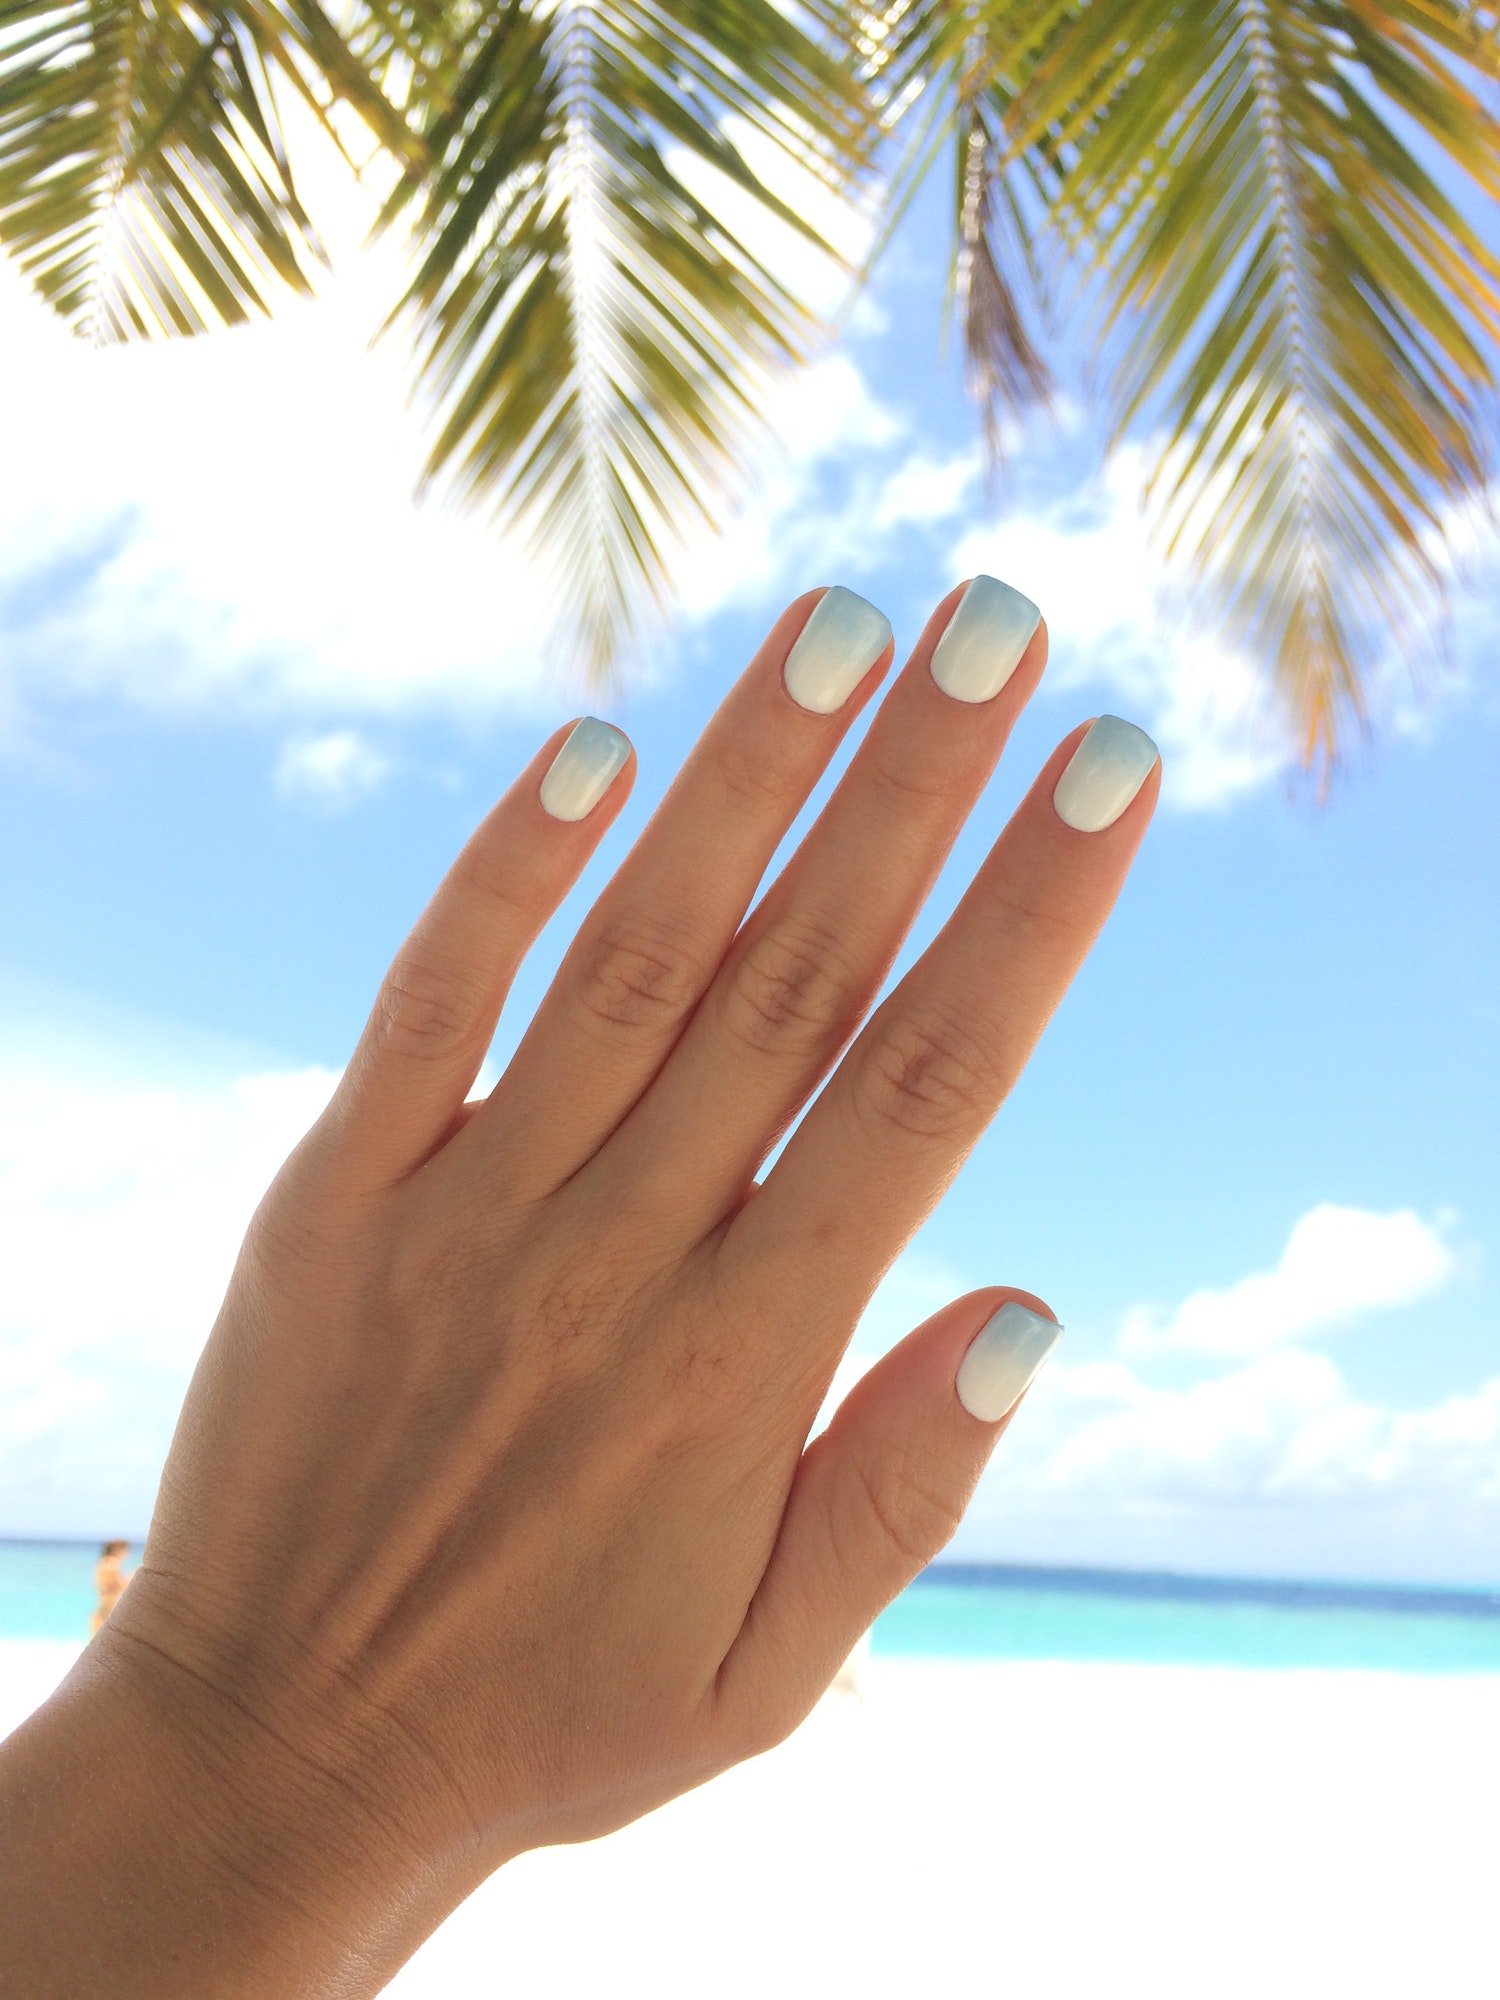 Gorgeous summer manicure.